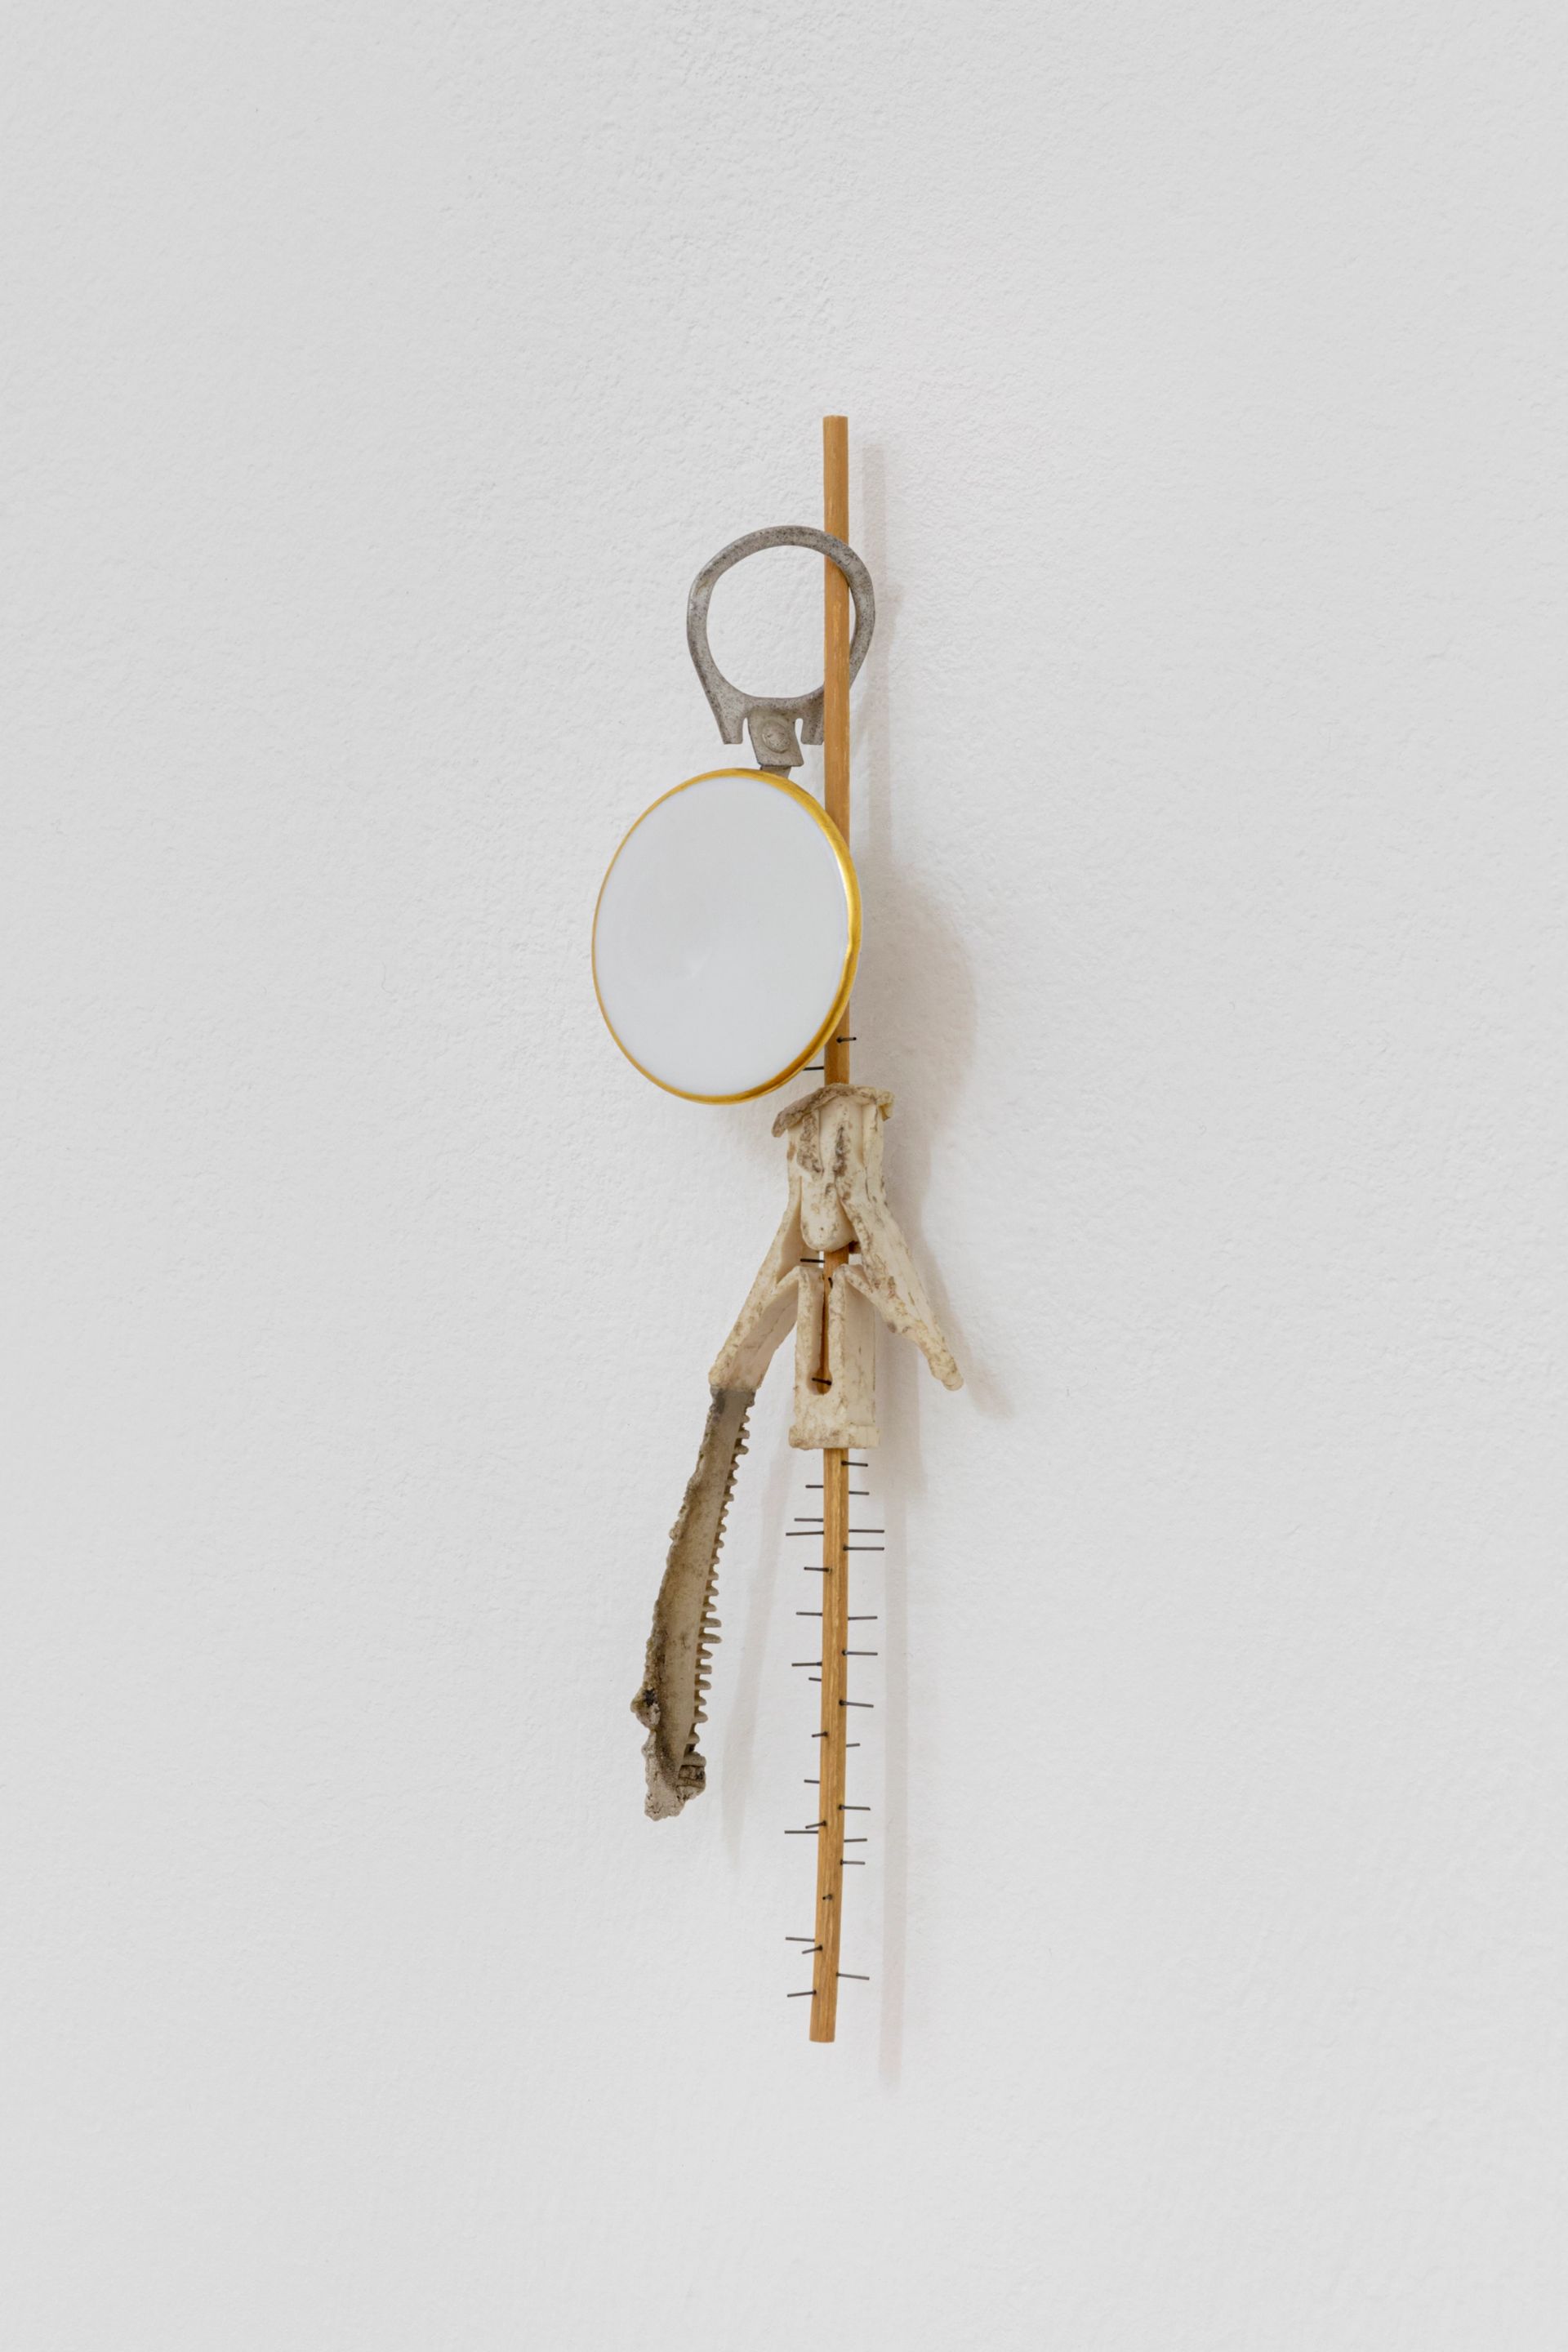 David Fesl, Untitled, 2022, plastic, plastic comb, oak skewer, porcelain teapot knob, tin lid, mechanical pencil refill, 18 × 4.2 × 1.9 cm, photo: Sebastian Kissel